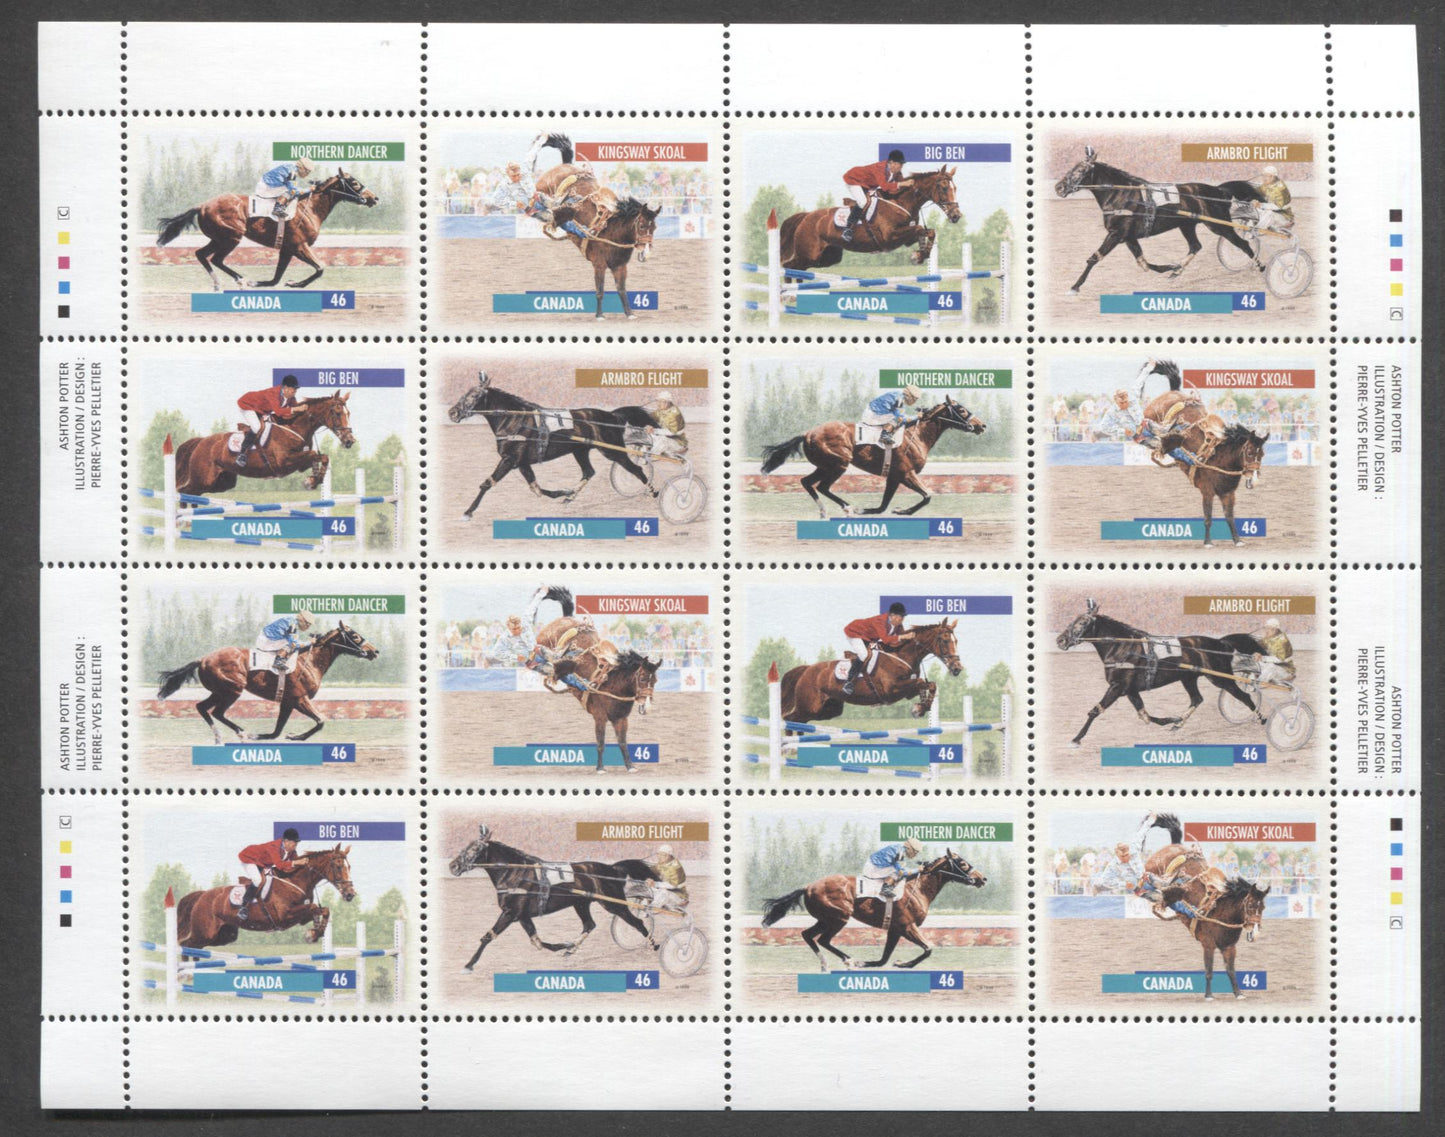 Lot 399 Canada #1794a 46c Multicolored Northern Dancer - Armbro Flight, 1999 Canadian Horses, Pane Of 16, TRC Paper, APC, VFNH 84, Unfolded,  Unitrade Cat. As Singles $25